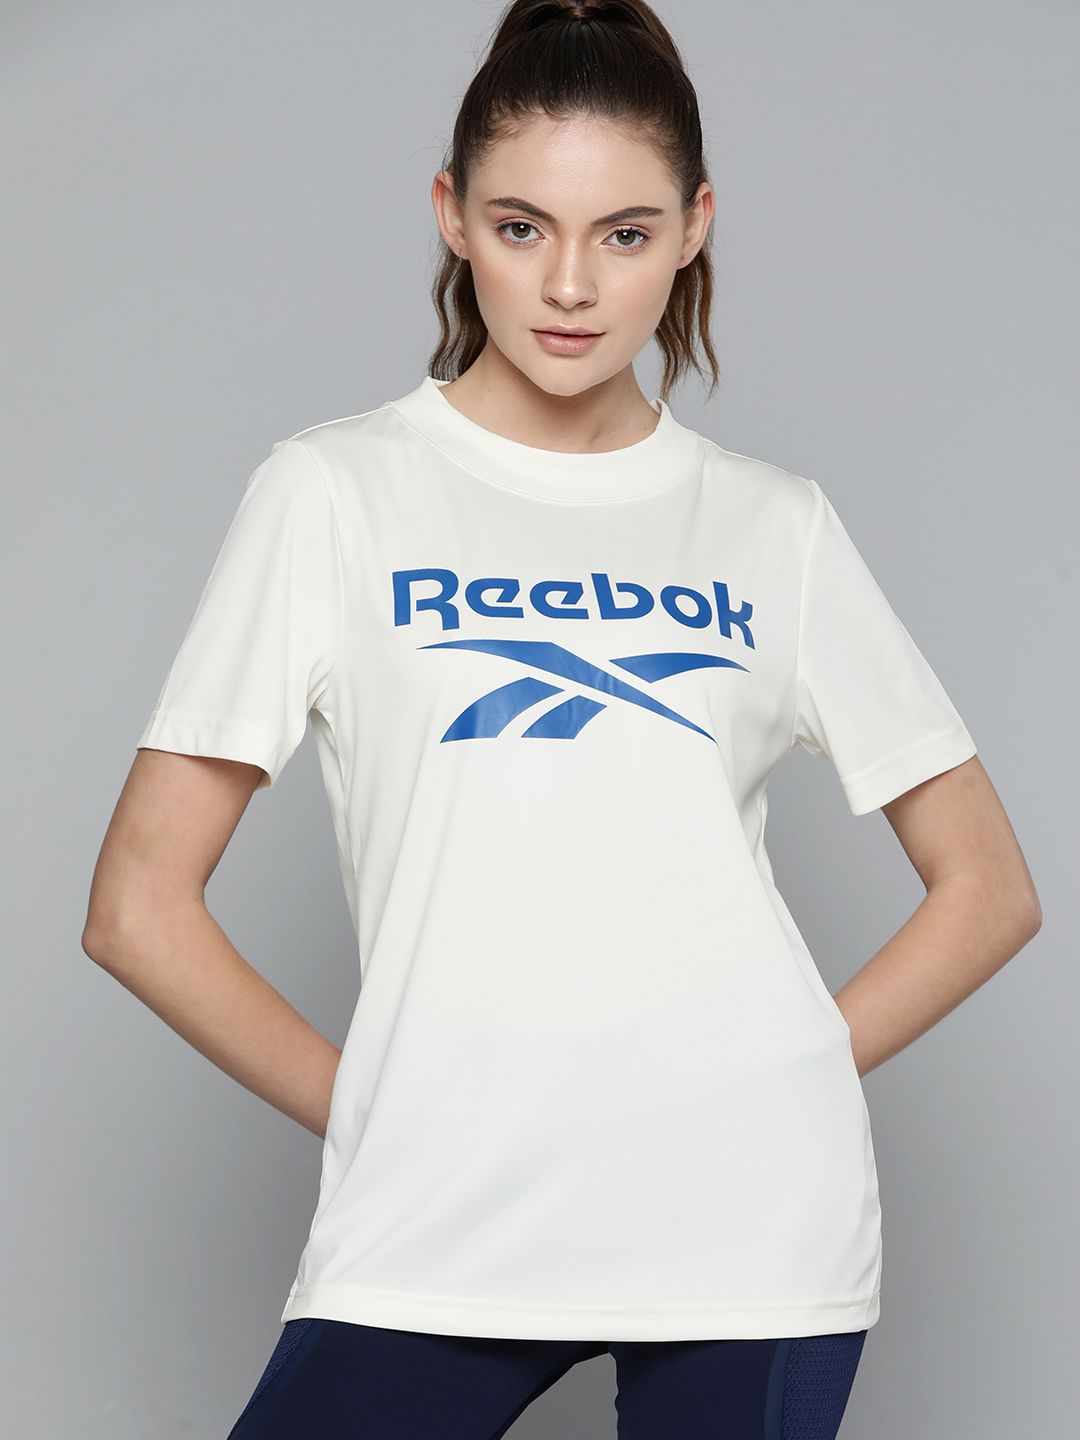 Reebok Women Cream-Coloured & Blue Brand Logo Printed Slim Fit T-shirt Price in India